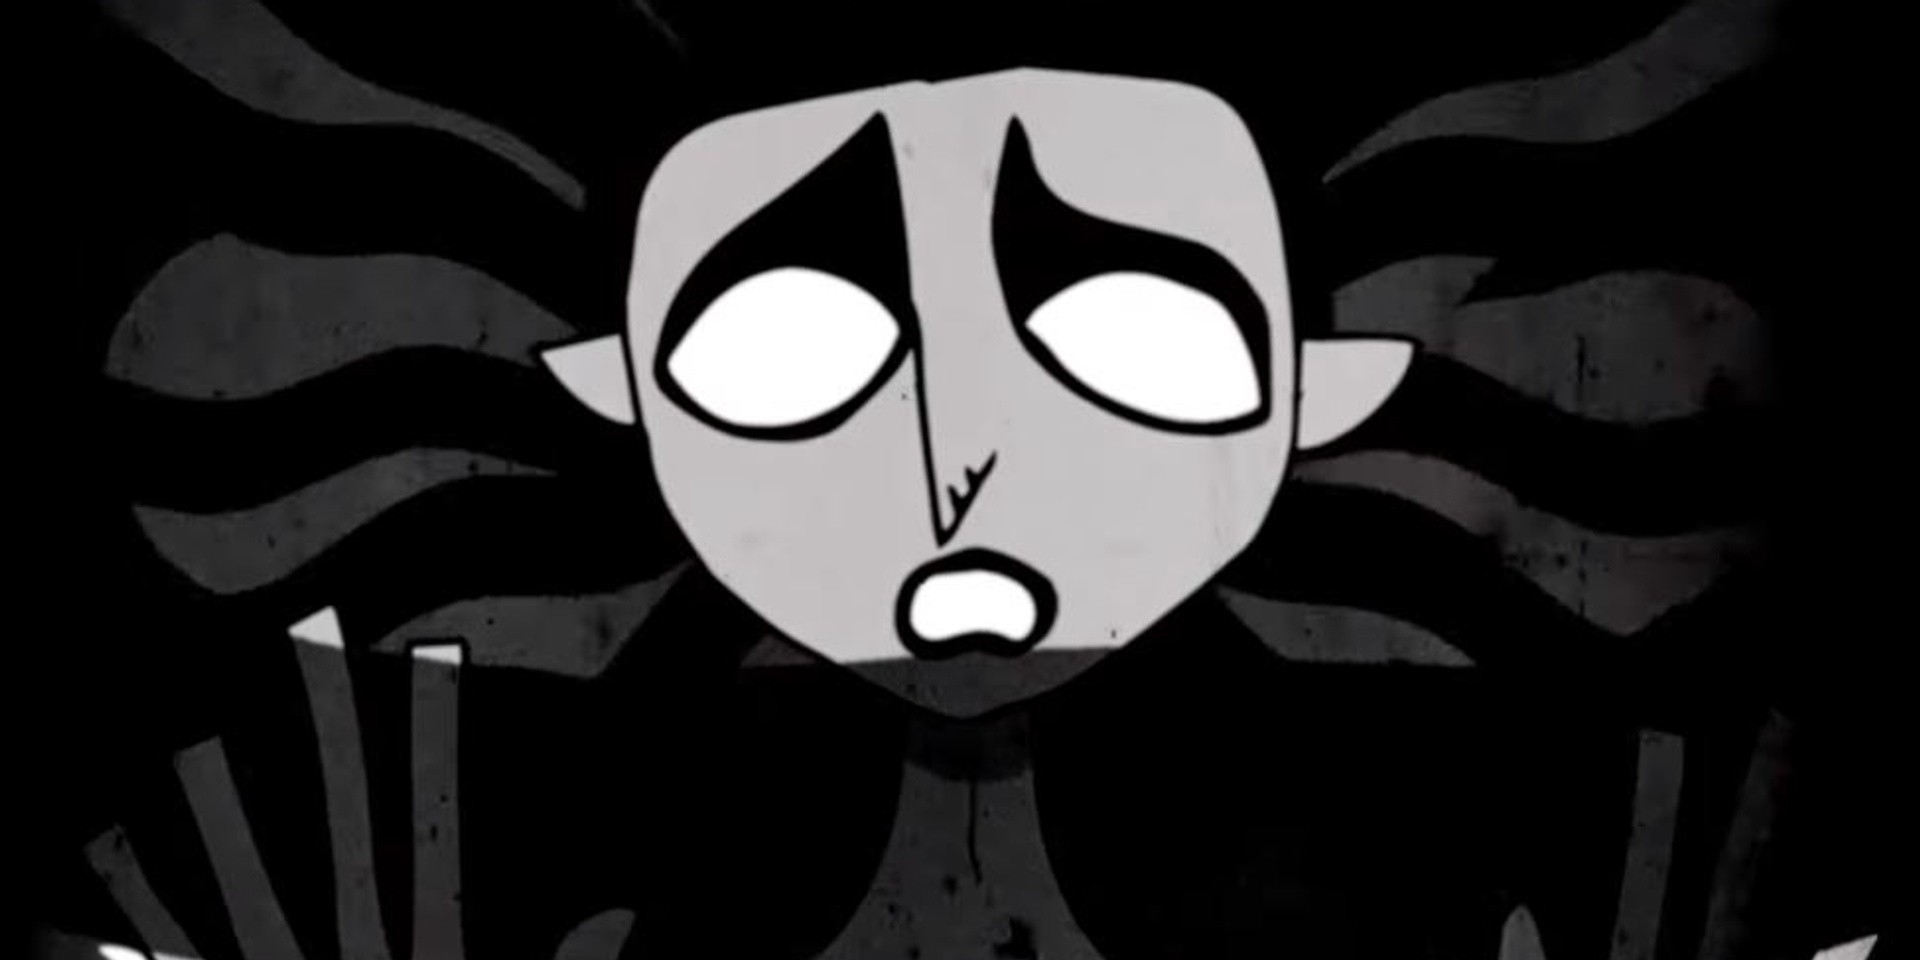 Mr. Bones and the Boneyard Circus unveil animated 'Bedlam' video – watch